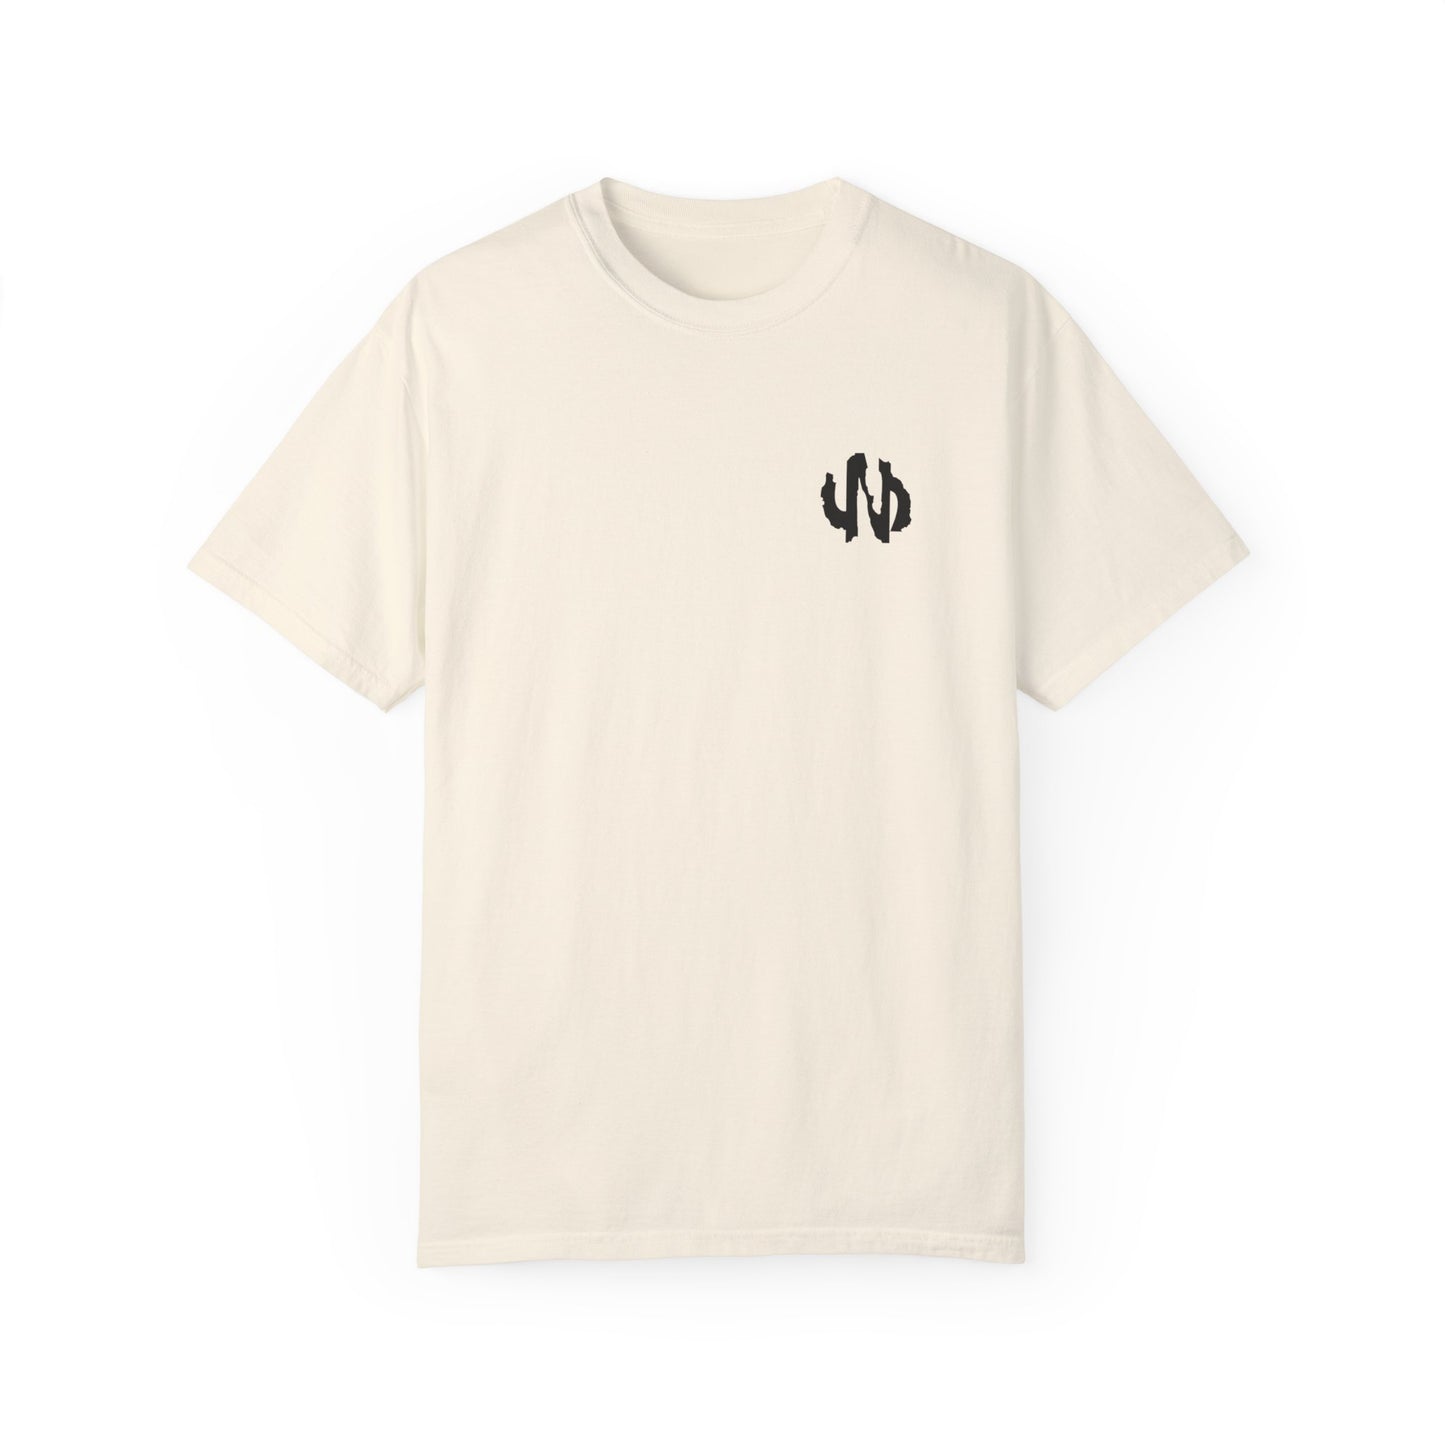 Unisex T-shirt cougar design